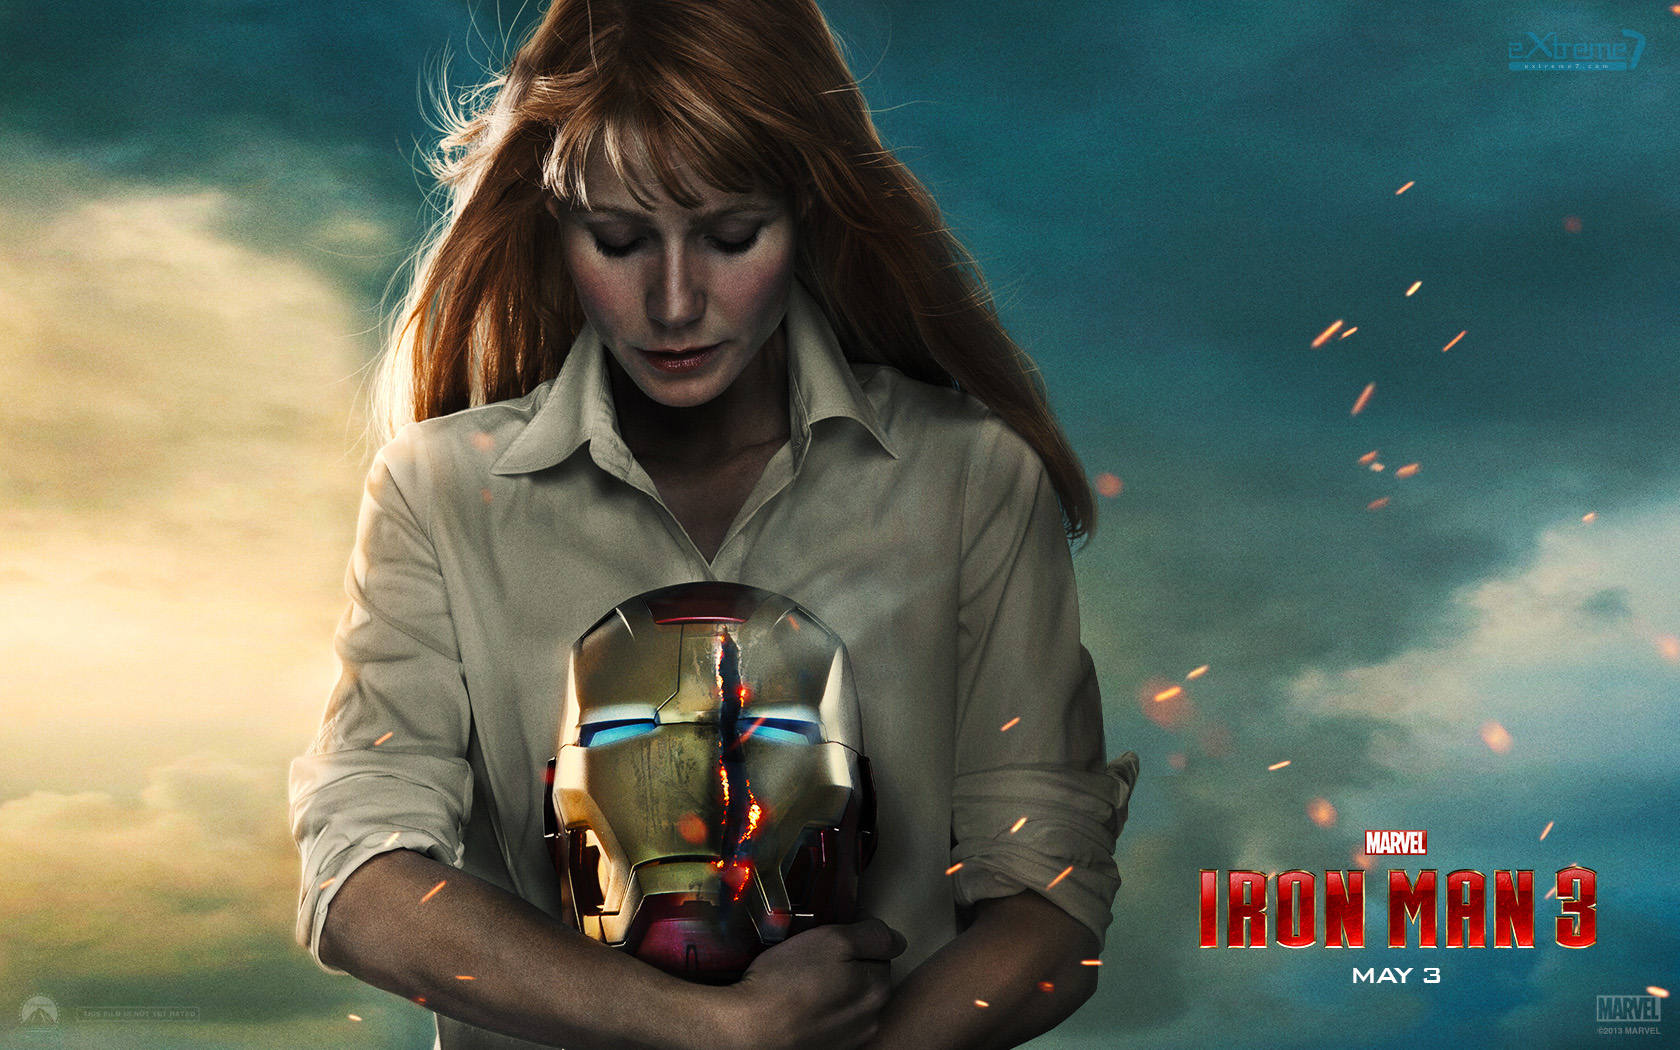 Iron man 3(cerita,video,wallpaper)komplit gan | Enthik Rulez[ E.R]